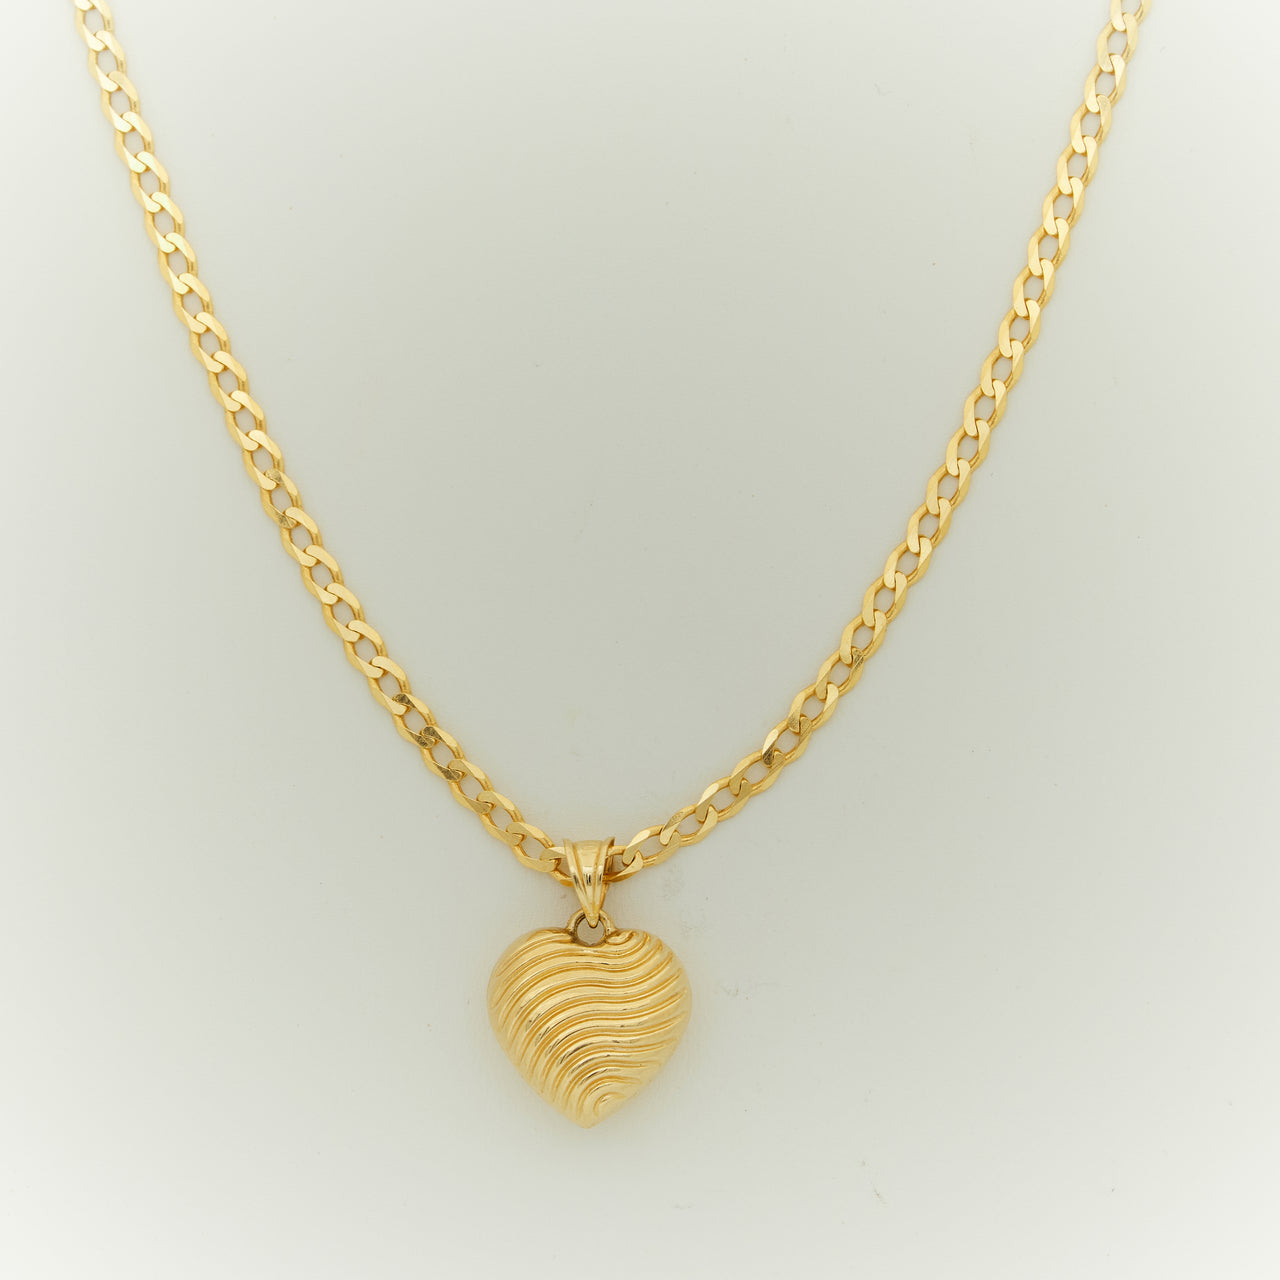 Cadenas de Oro 10k #4 para Mujer o Adolecentes. Acosta´s jewelry